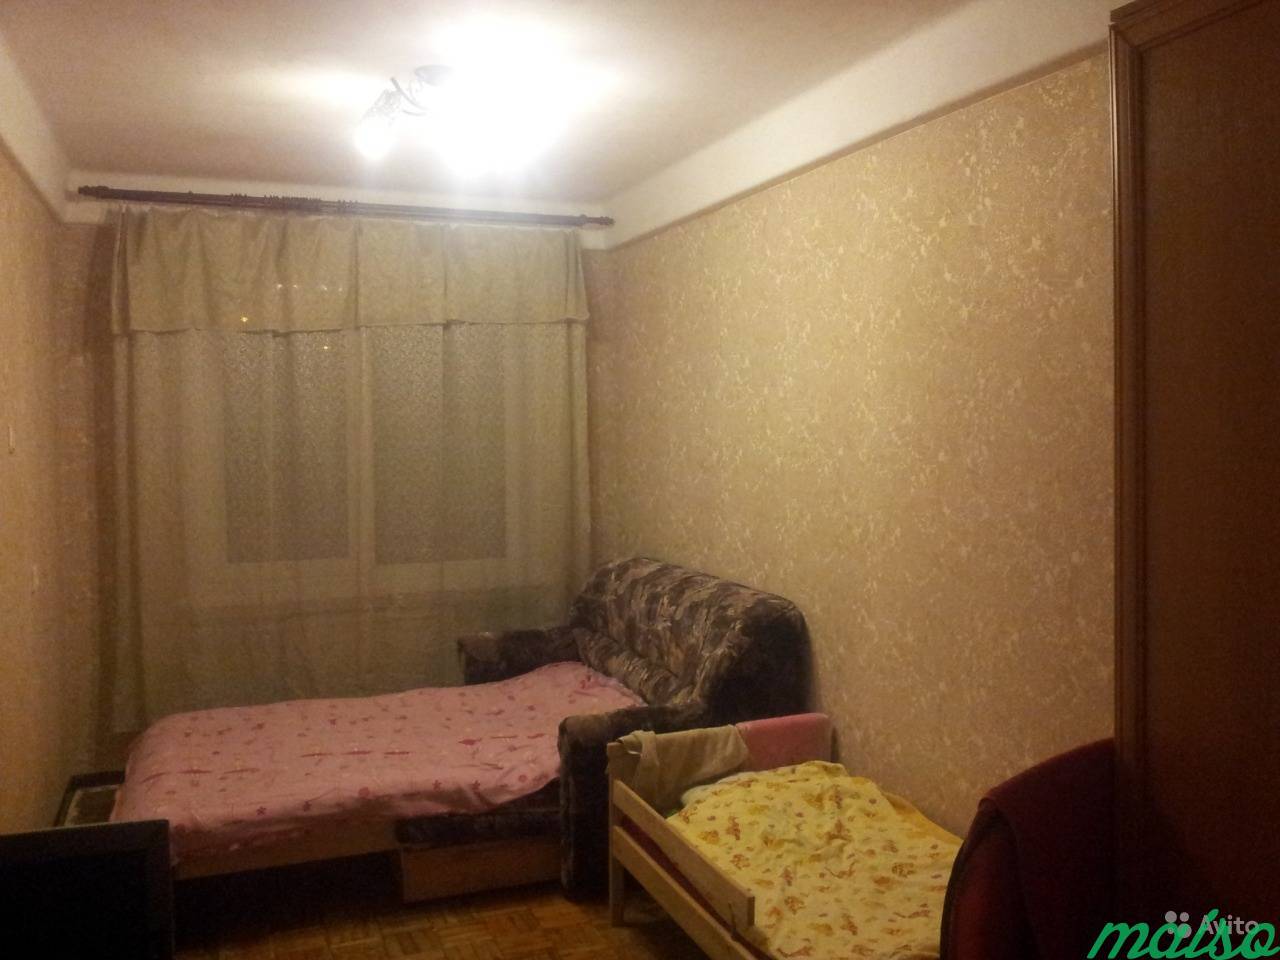 Комната 32 м² в 4-к, 1/5 эт. в Санкт-Петербурге. Фото 4